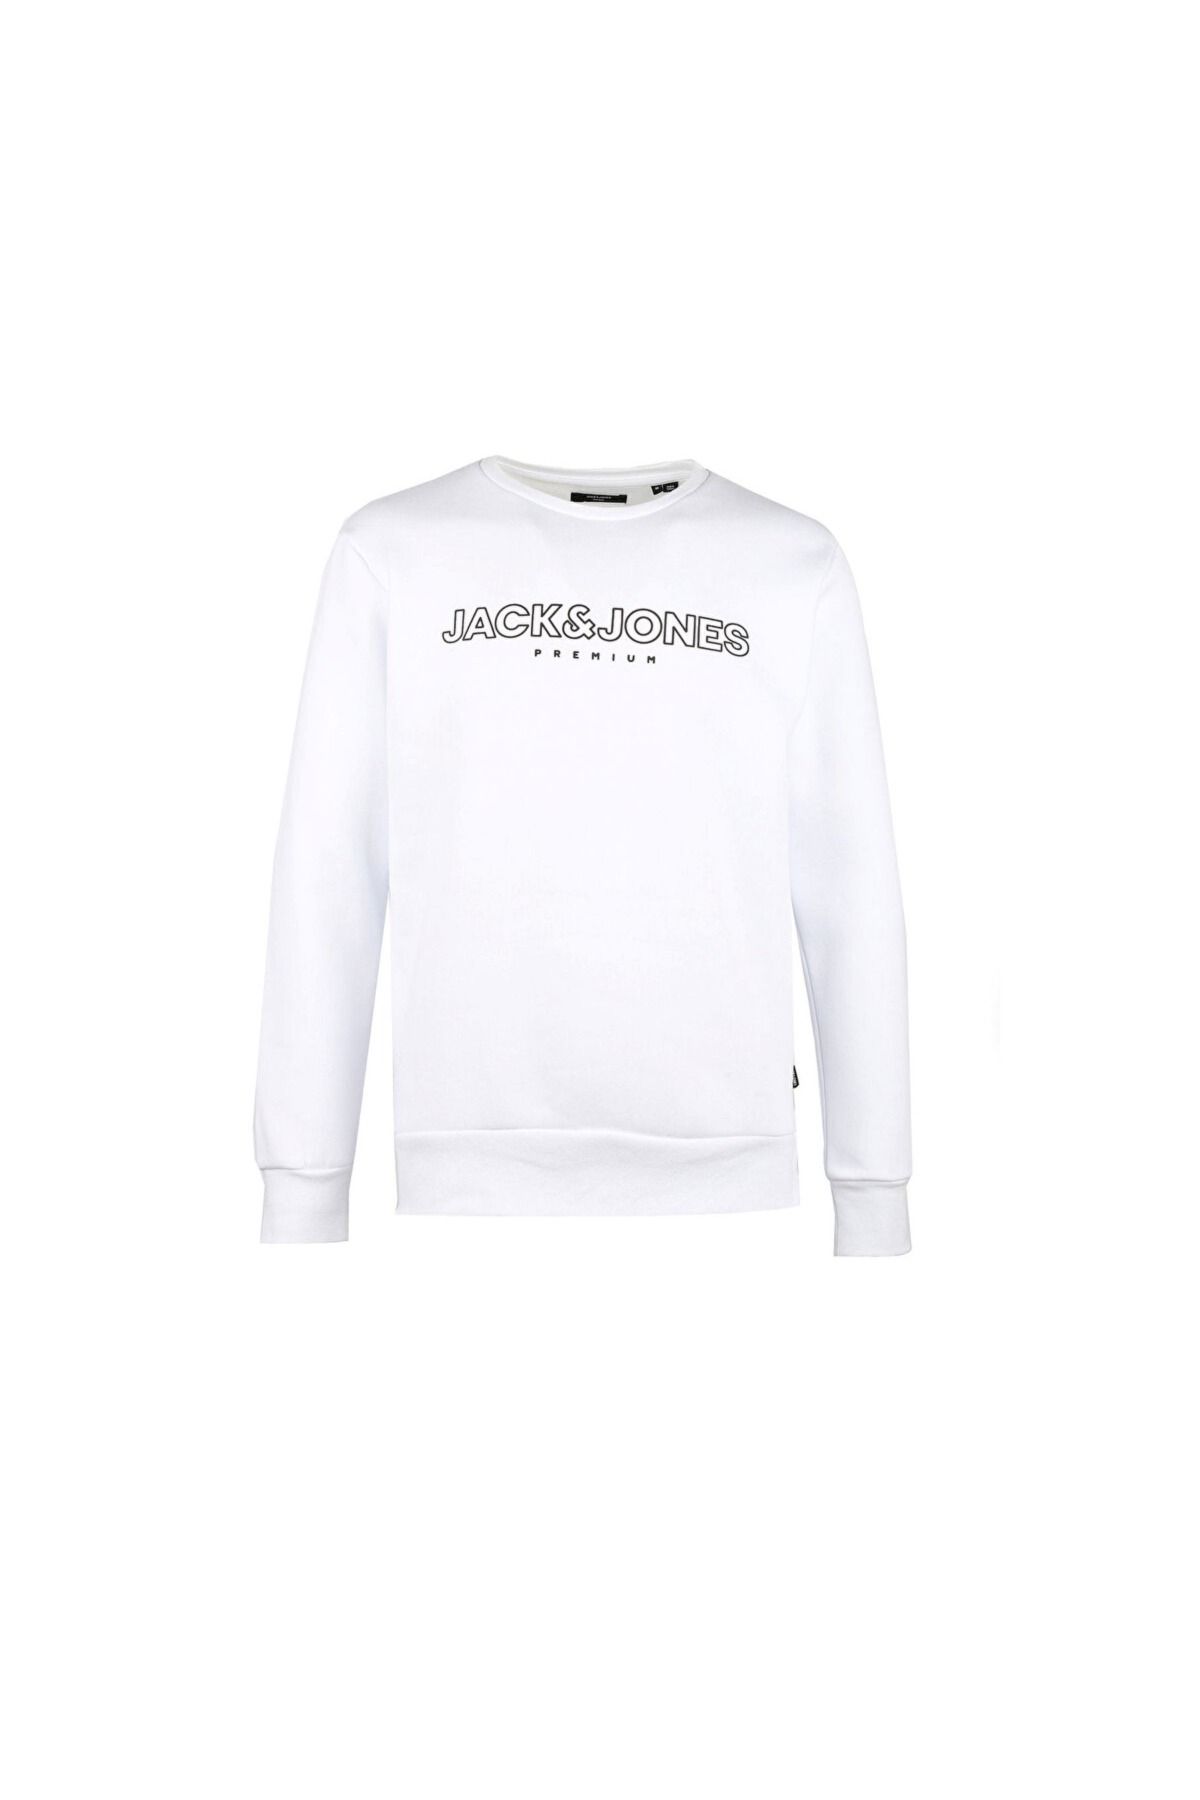 Jack & Jones Jack Jones Blajason Brandıng Sweat Crew Neck Erkek Beyaz Sweatshirt 12245593-01